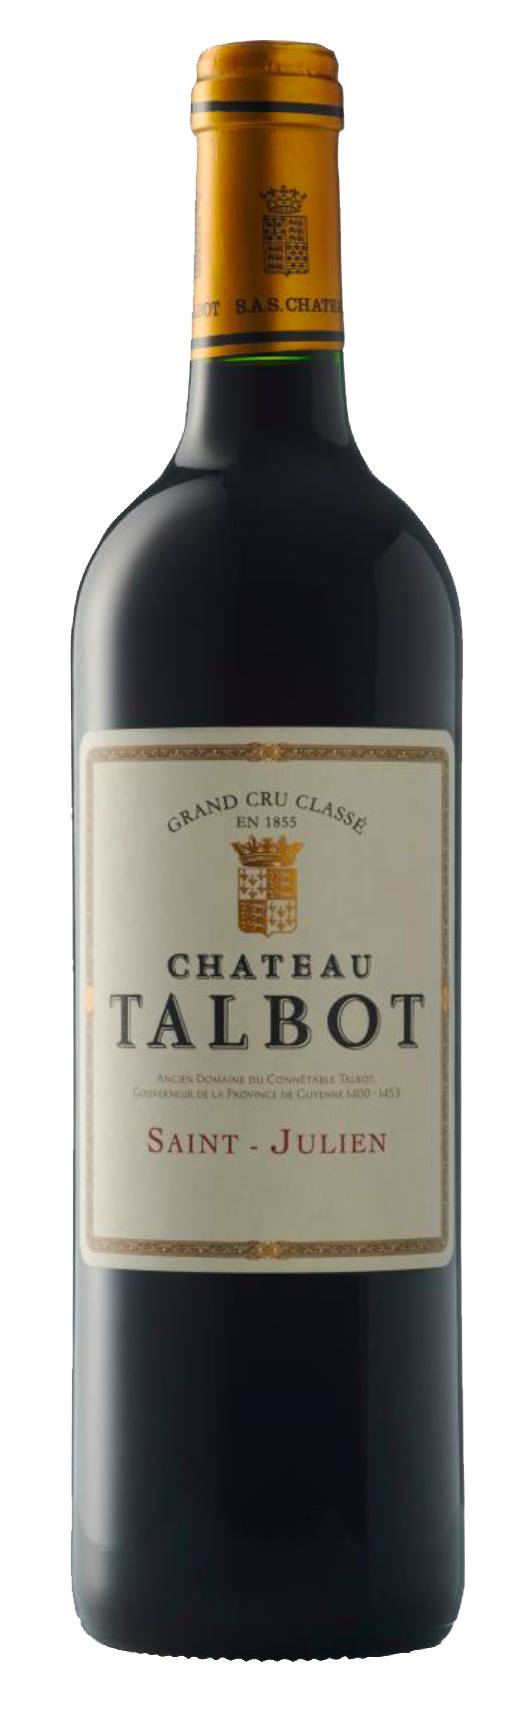 Château Talbot 2017 – Saint-Julien, Grand Cru Classé